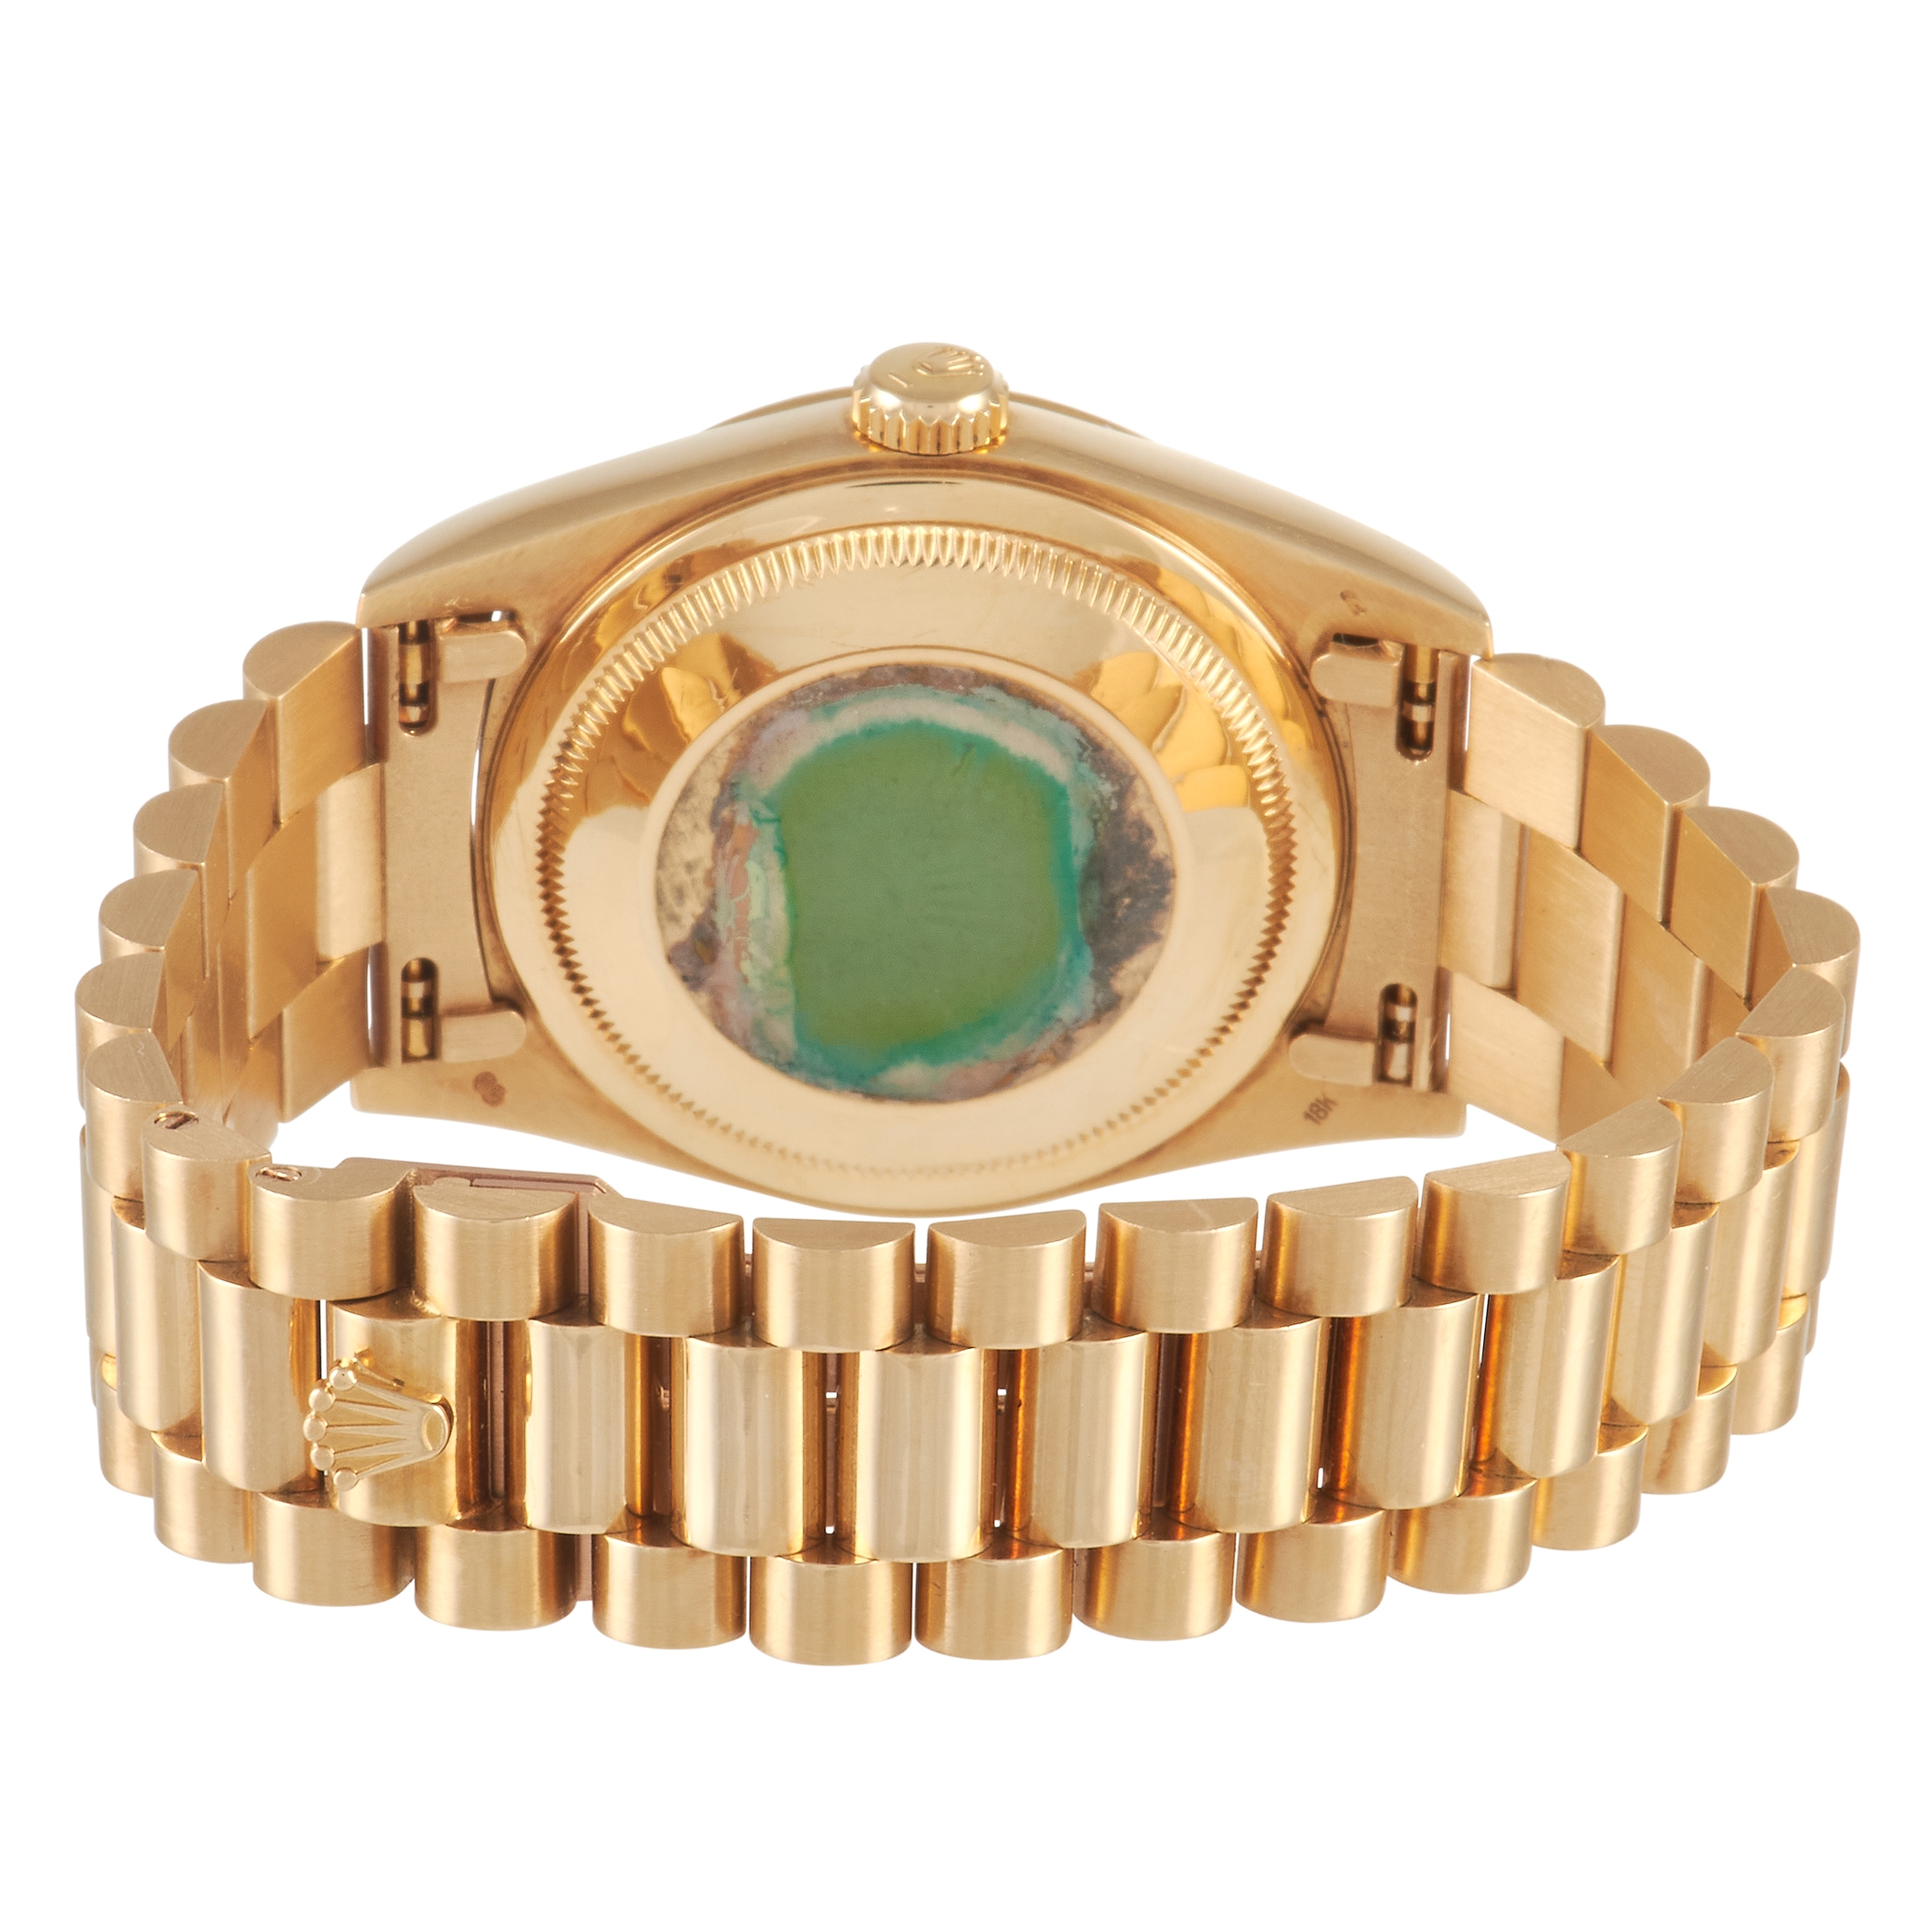 Rolex Day-Date 36 Yellow Gold Myriad Diamond Watch 18238